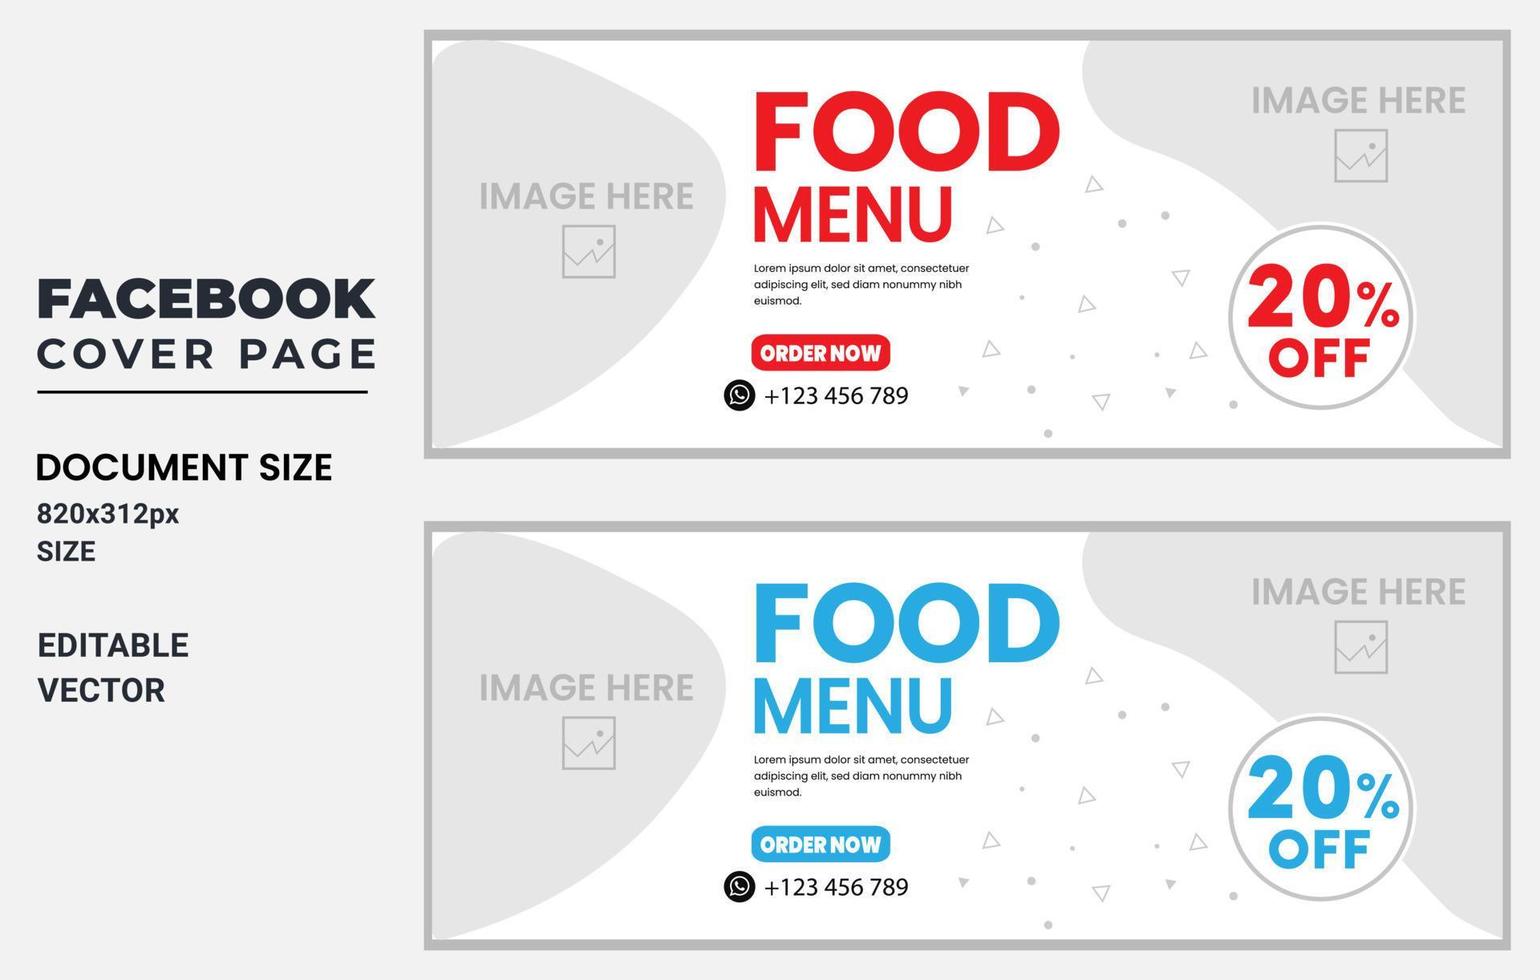 Food web banner template, web banner design, corporate banner vector